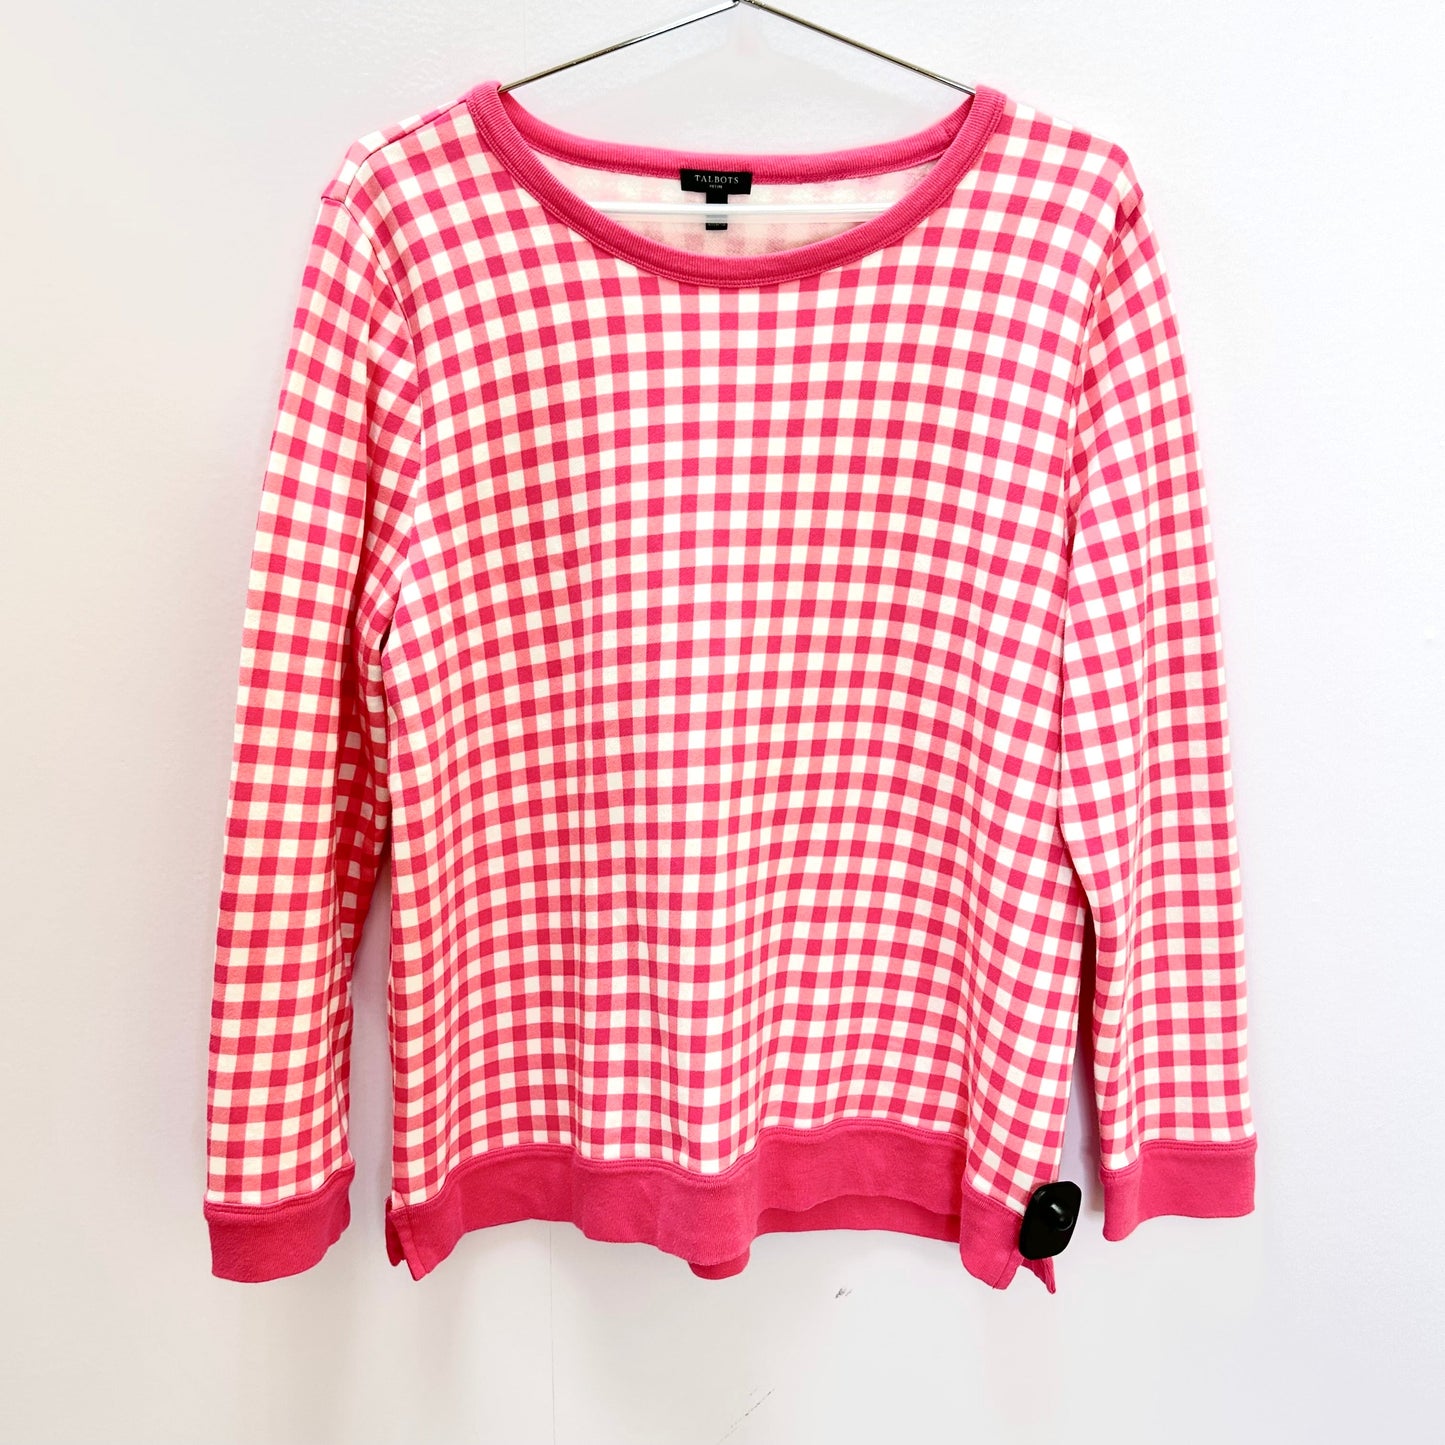 Sweater By Talbots  Size: Xl Petite